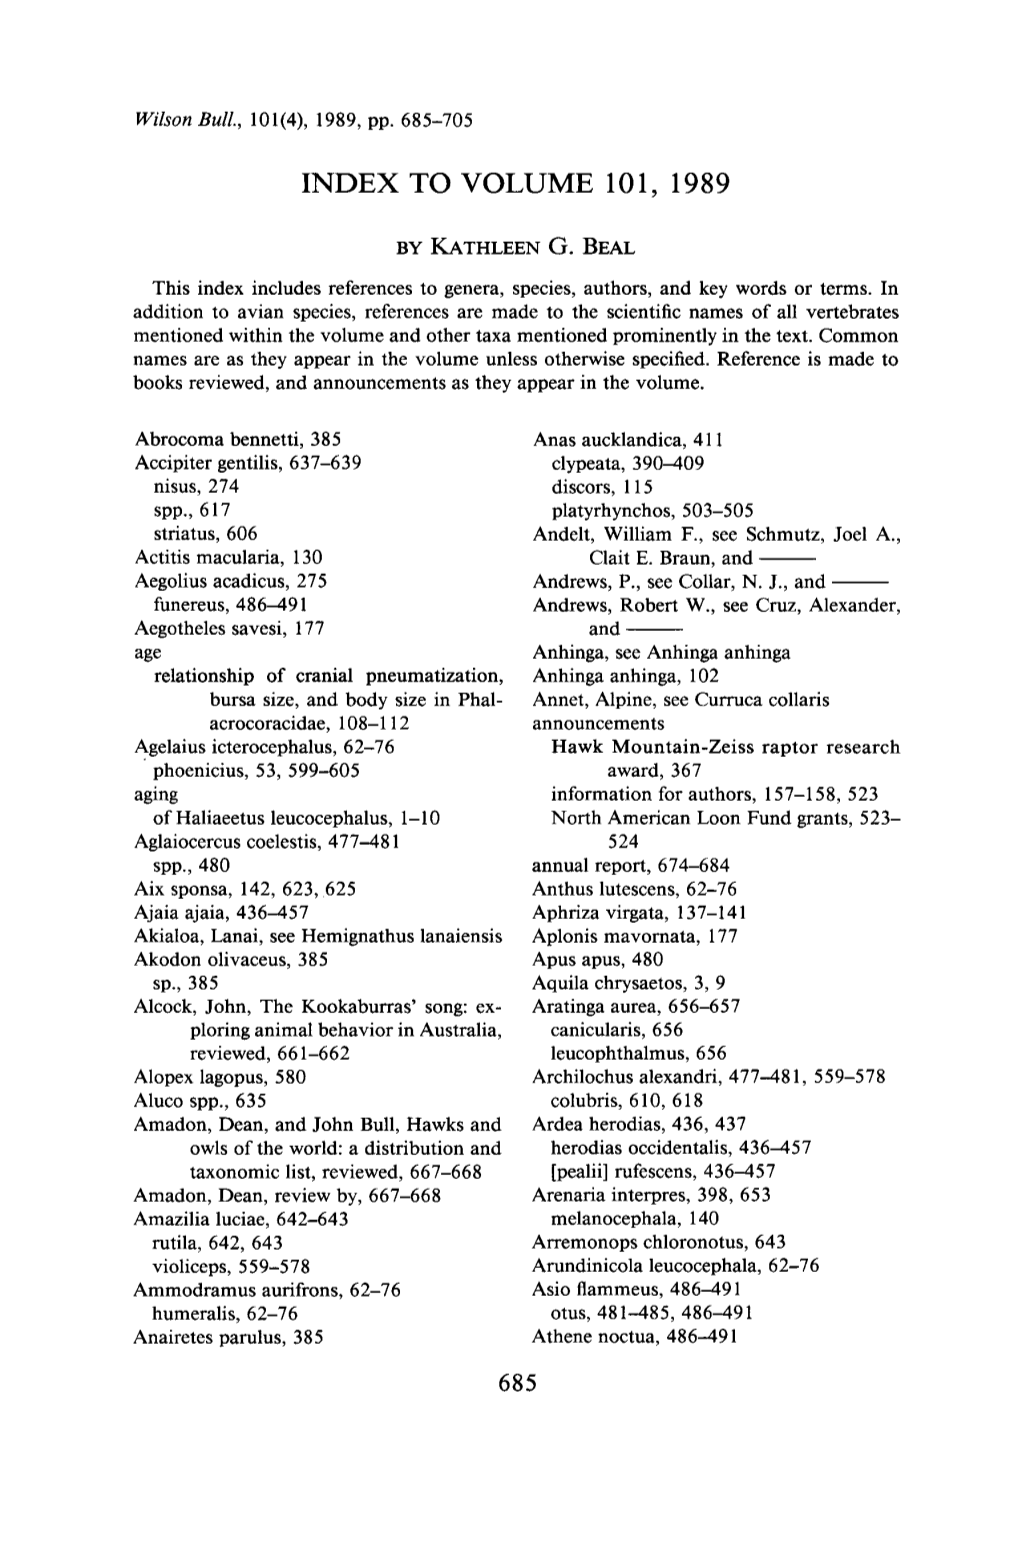 Index to Volume 101, 1989